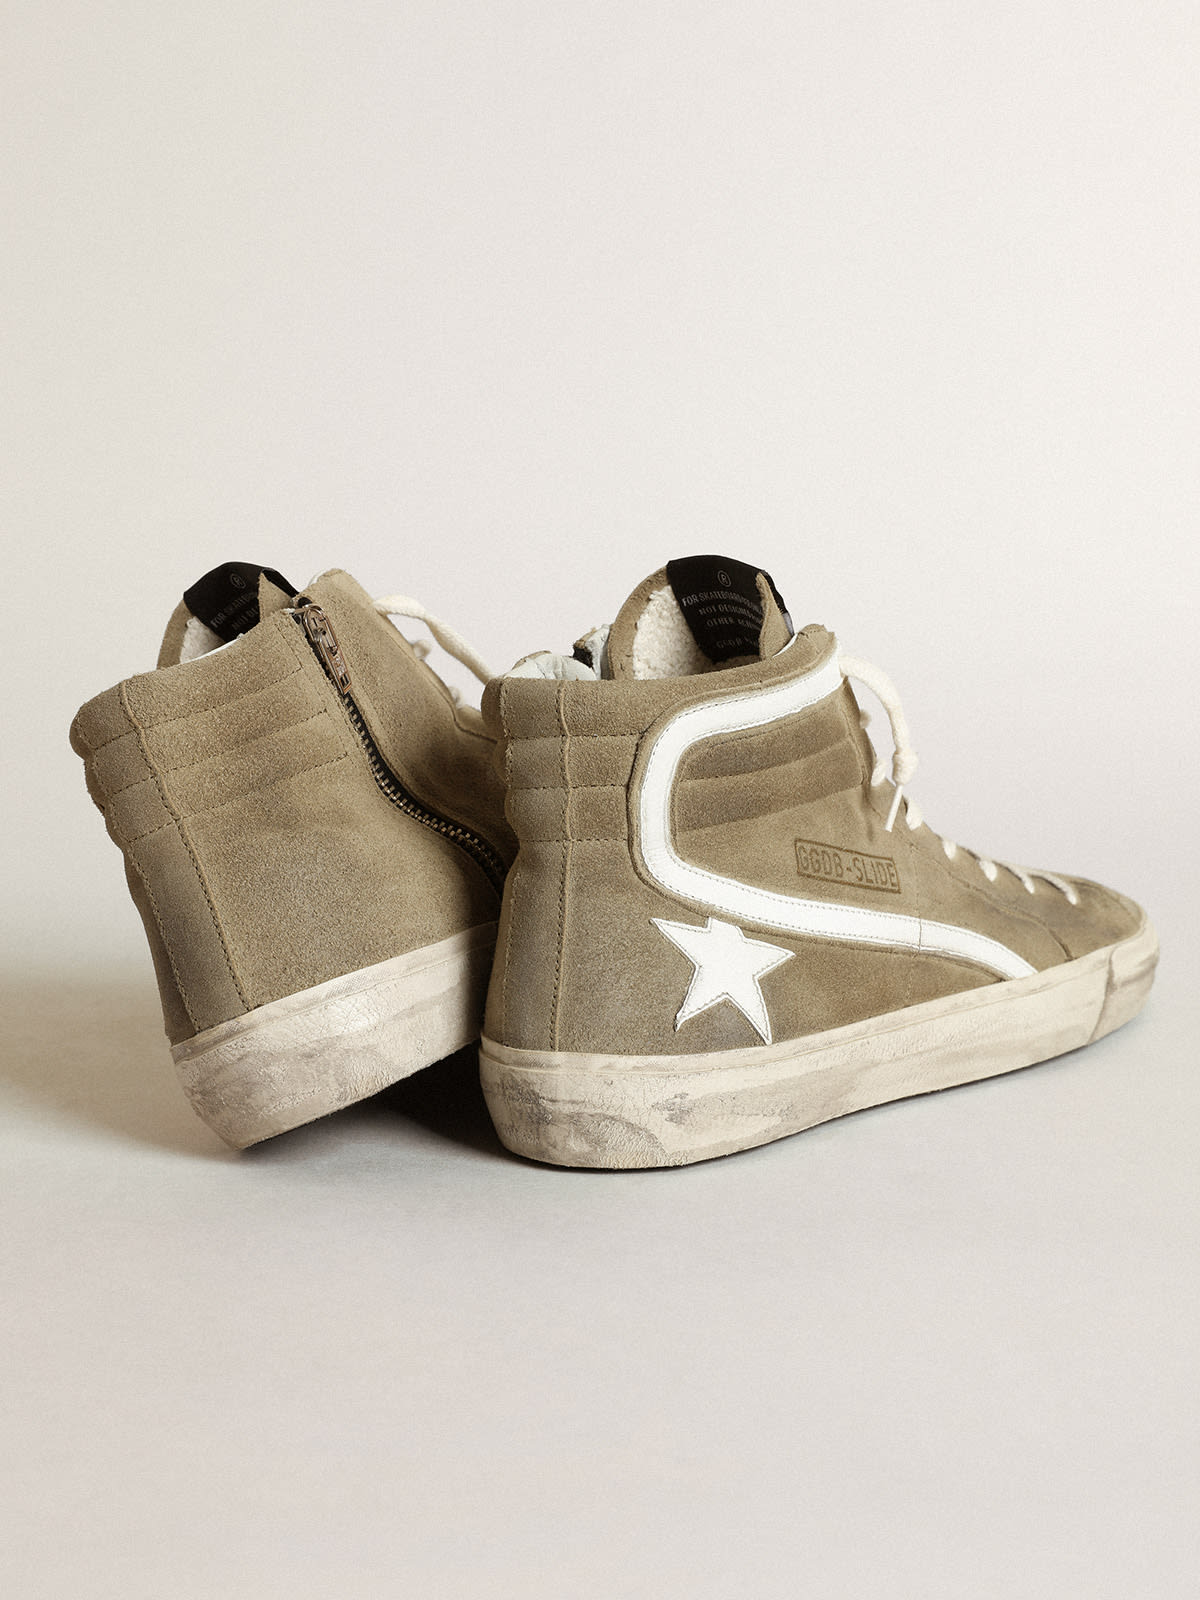 Golden Goose - Sneaker Slide in suede verde militare con stella e virgola in pelle bianca in 